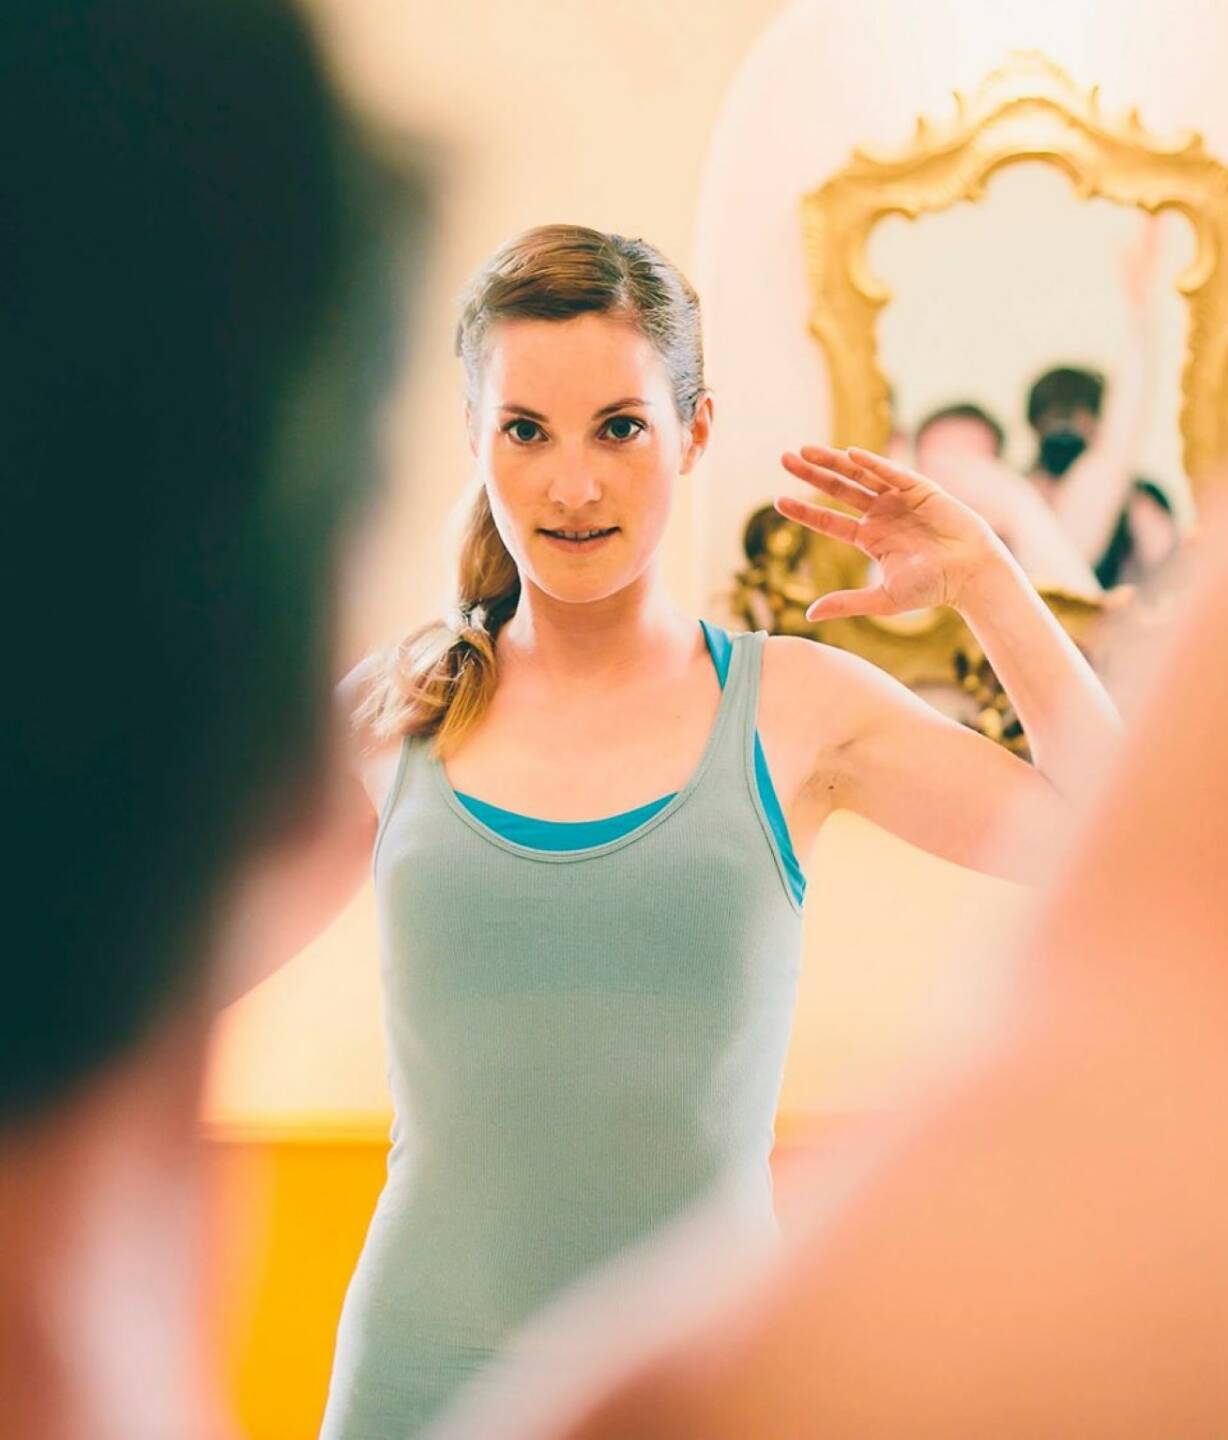 Monika Kletzmayr Yoga im Spiegel (c) Marija Kanizaj
